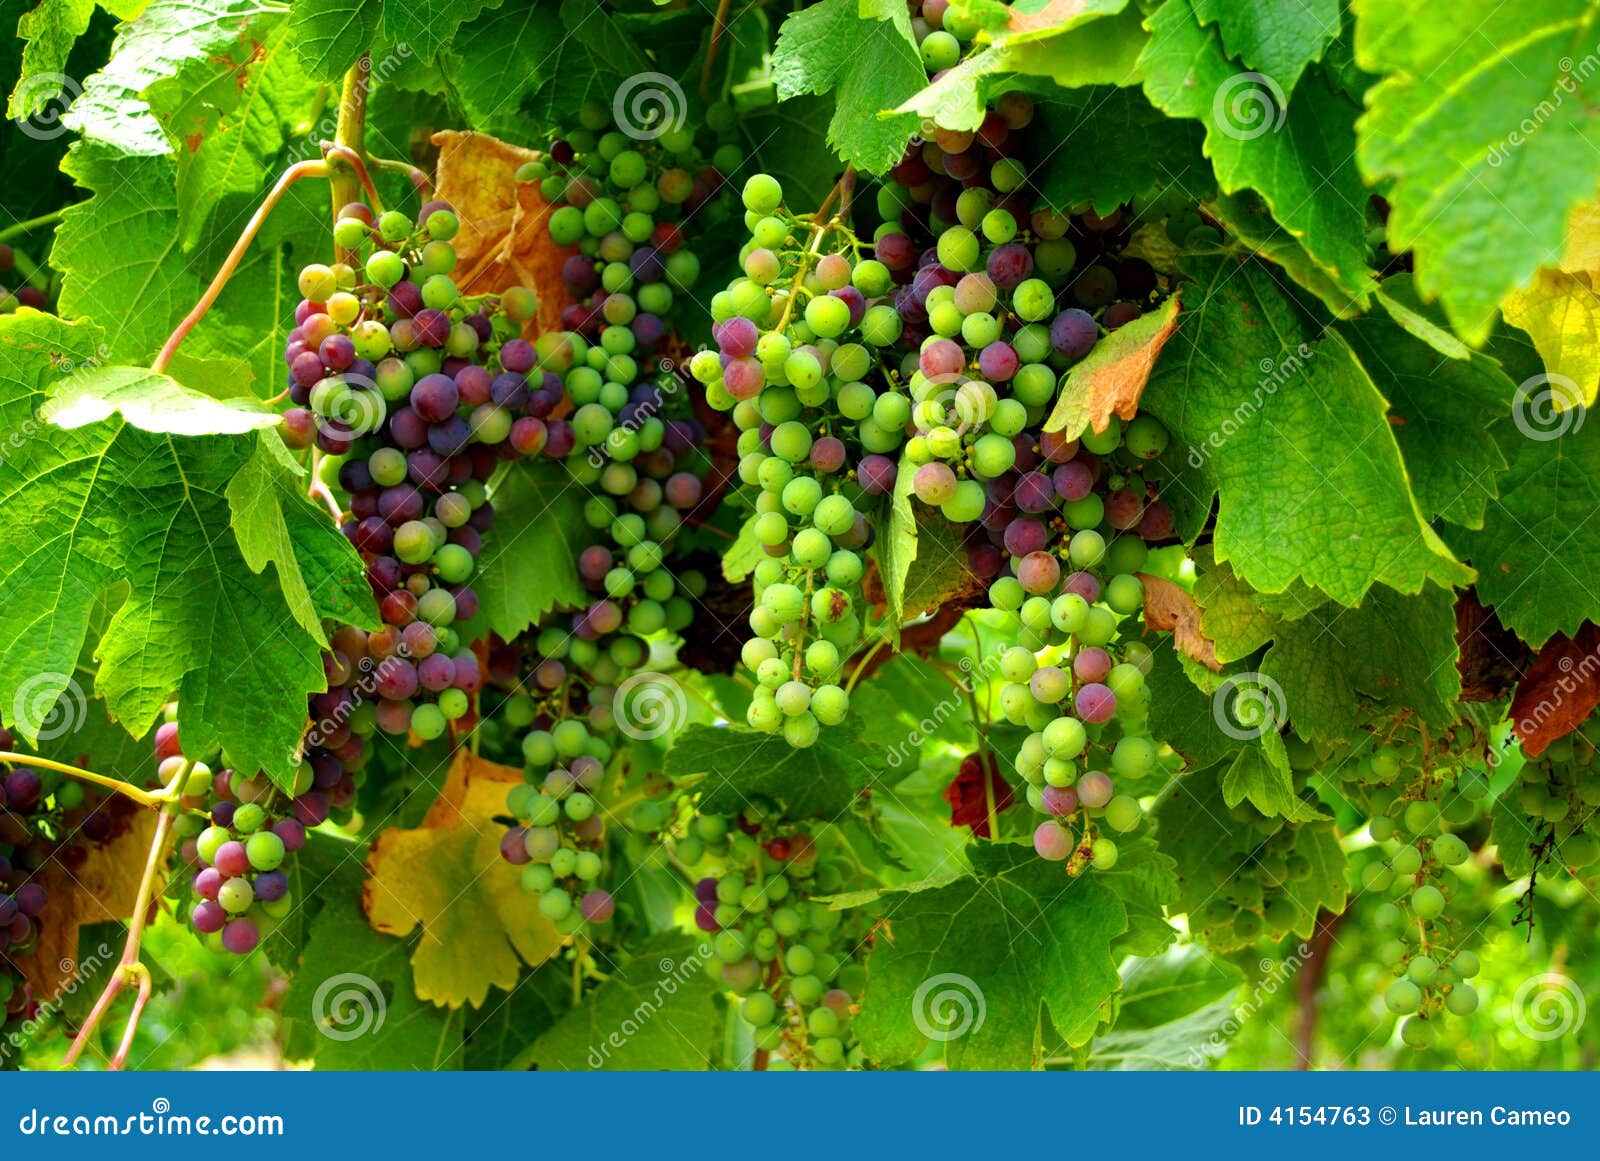 merlot grapes